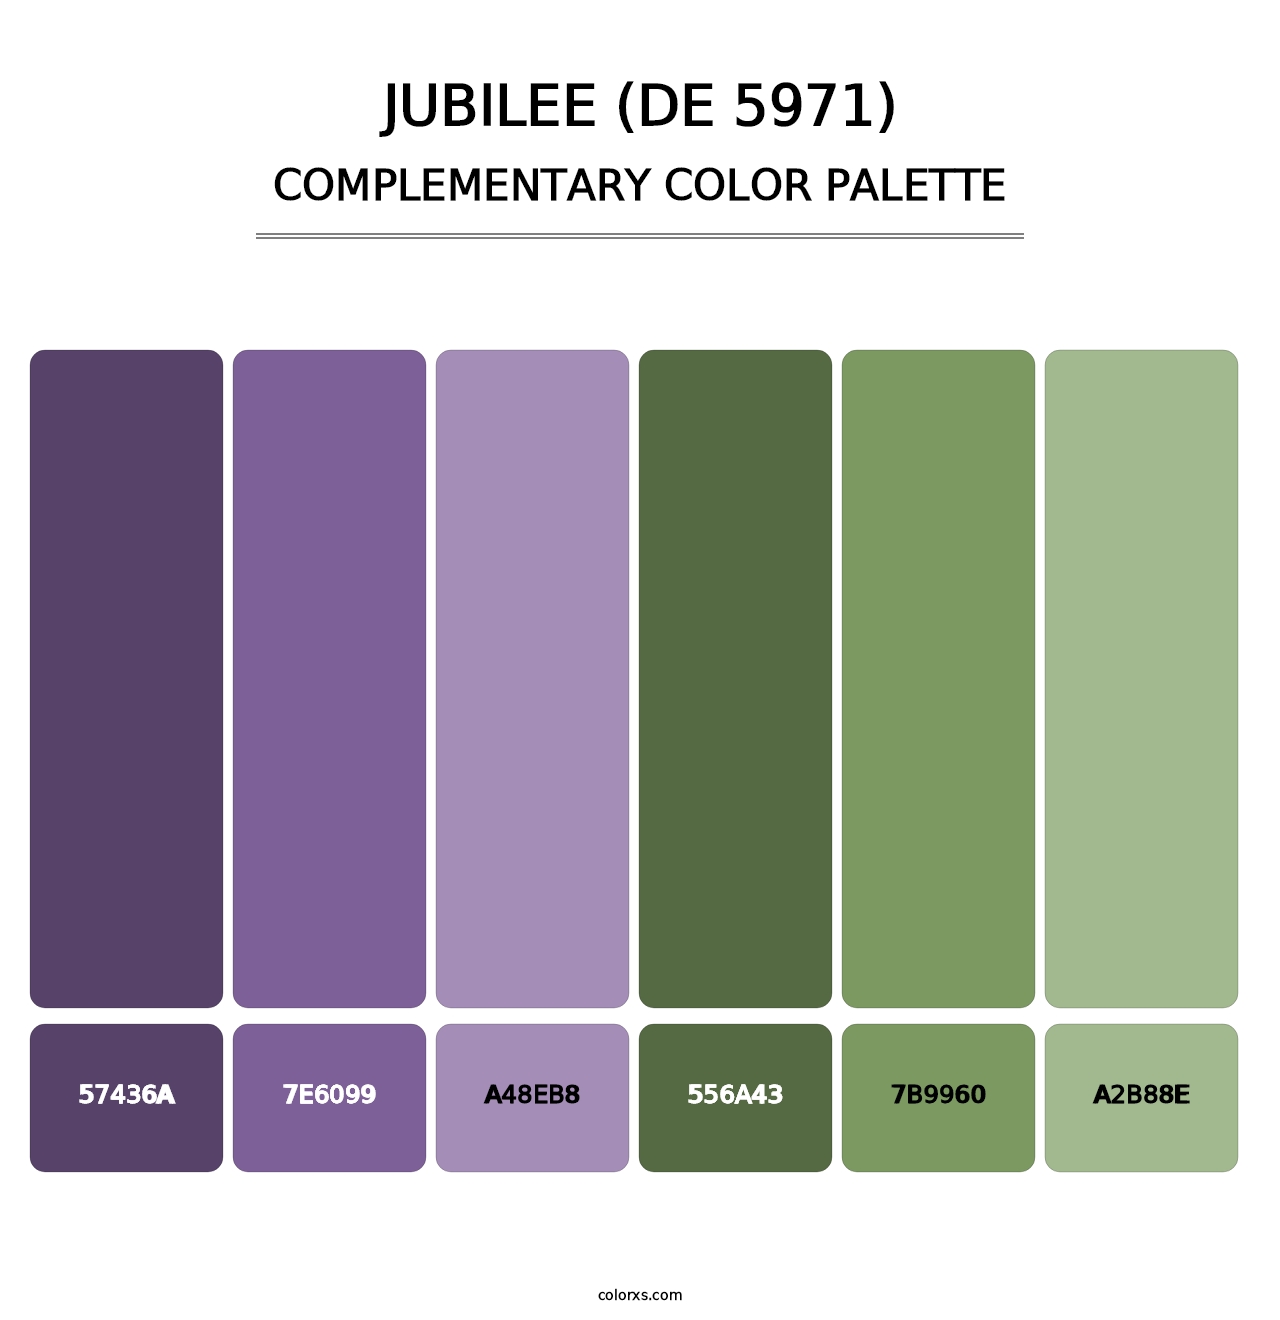 Jubilee (DE 5971) - Complementary Color Palette